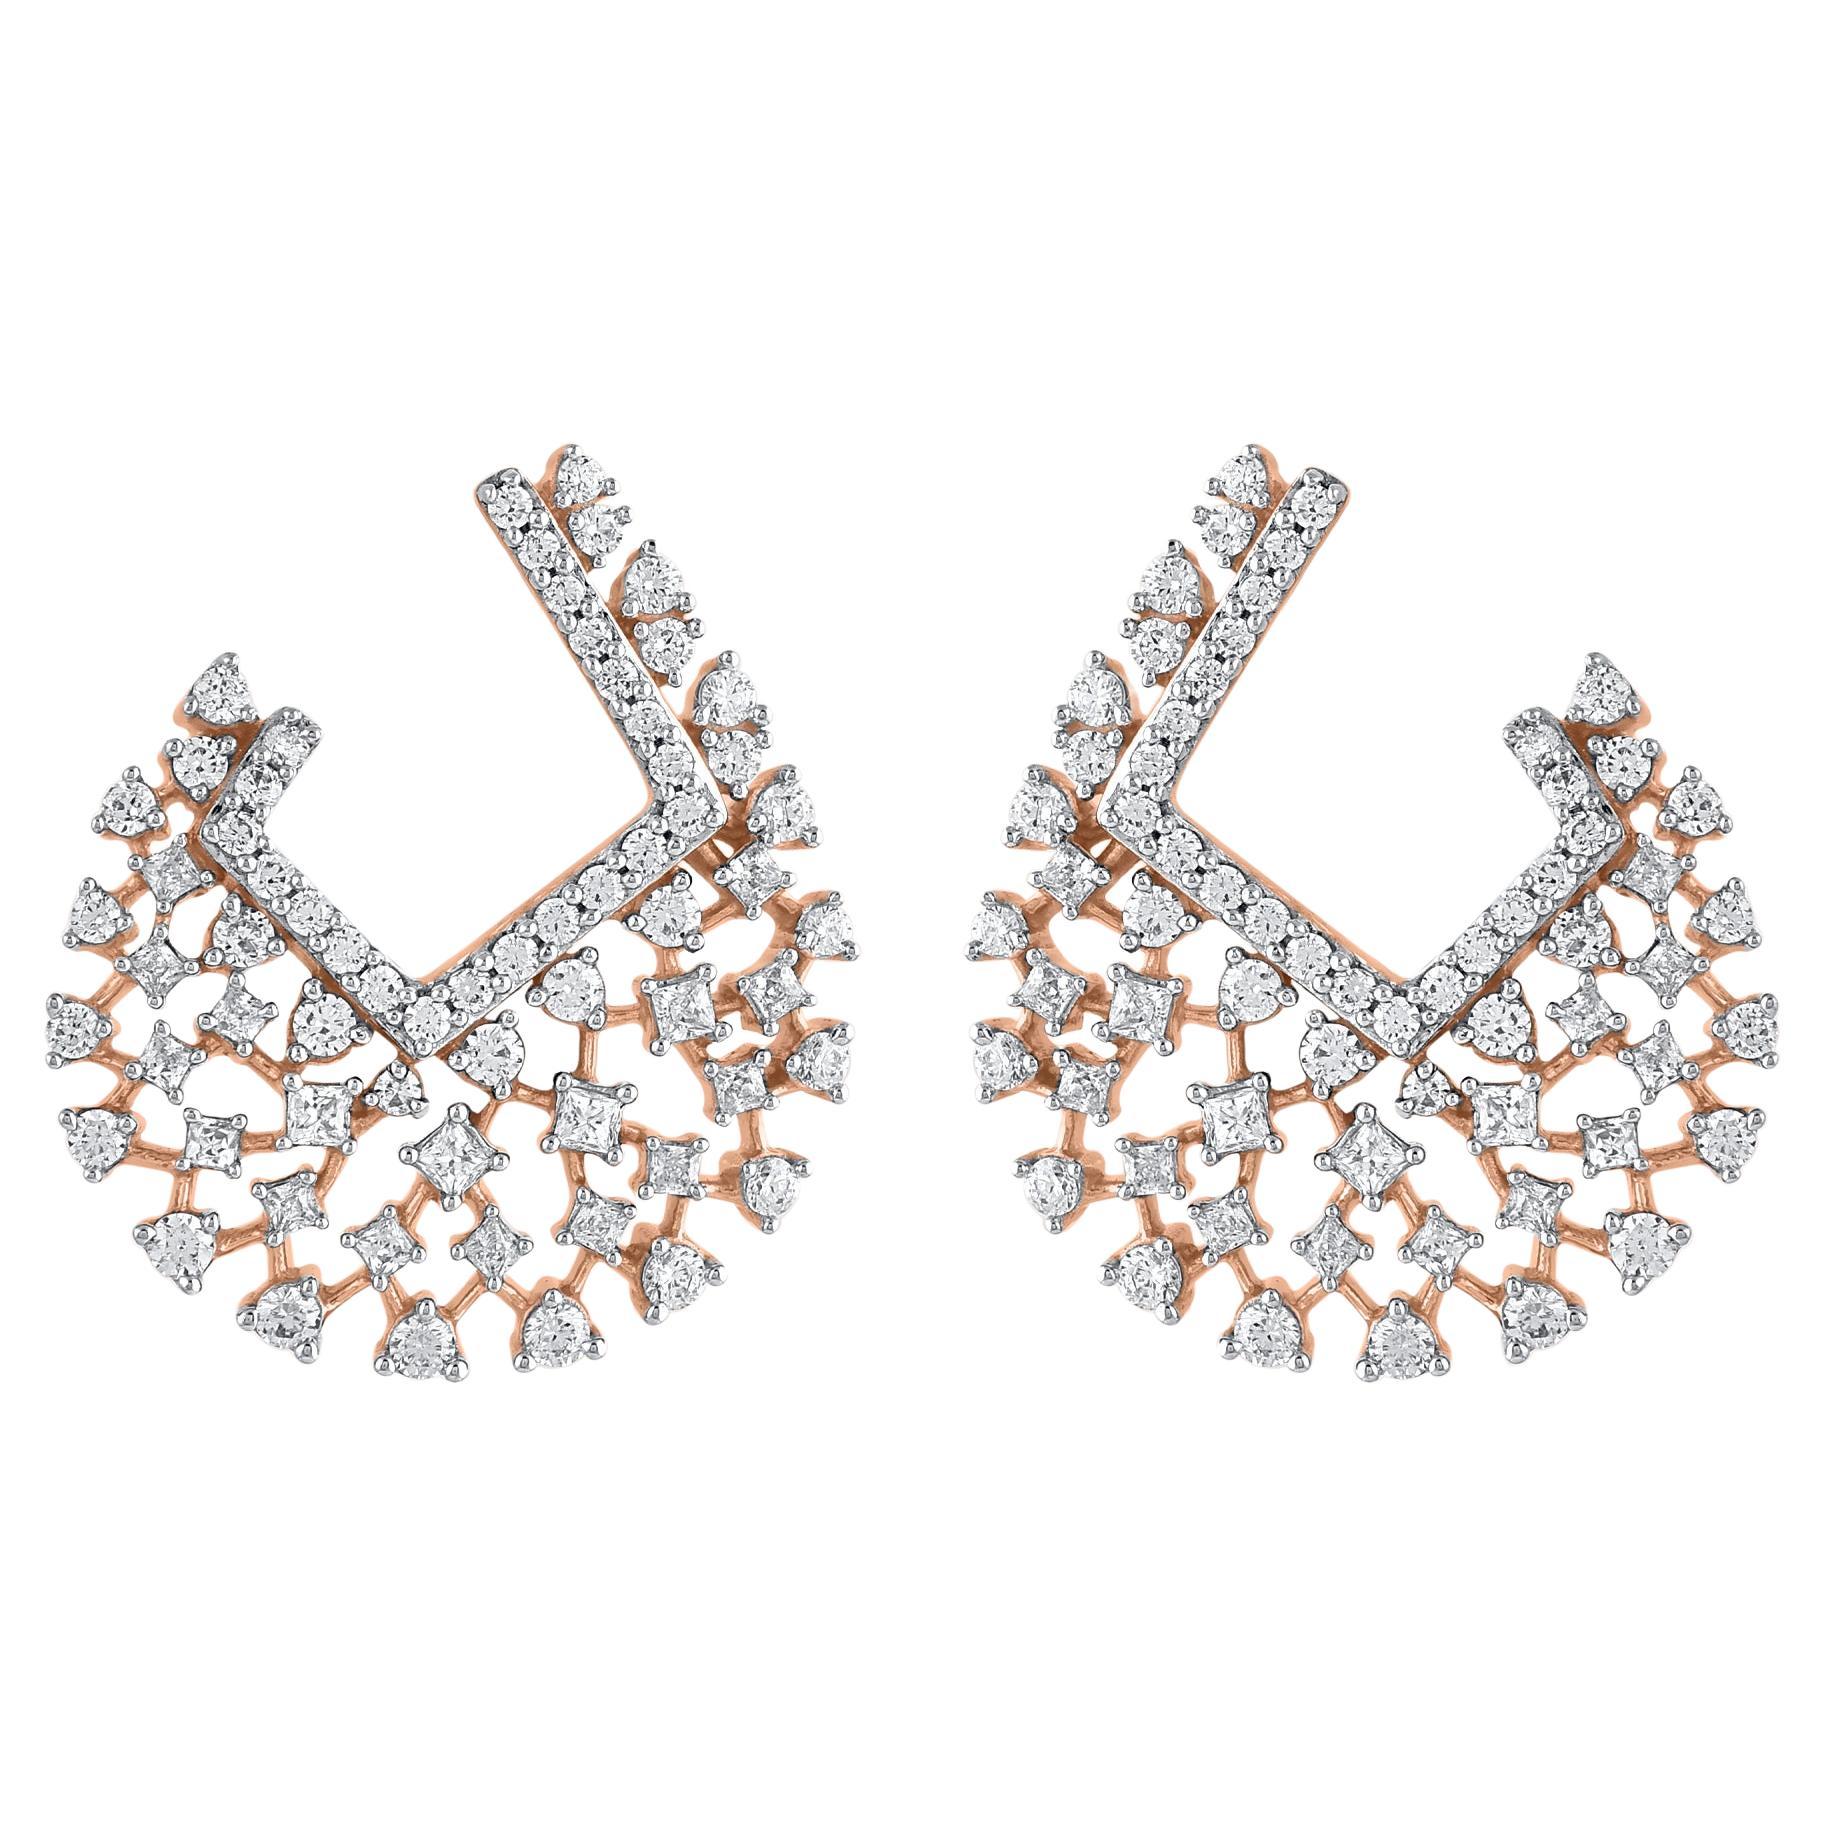 TJD 2.0 Carat Natural Diamonds Designer Stud Earrings in 14 Karat Rose Gold For Sale